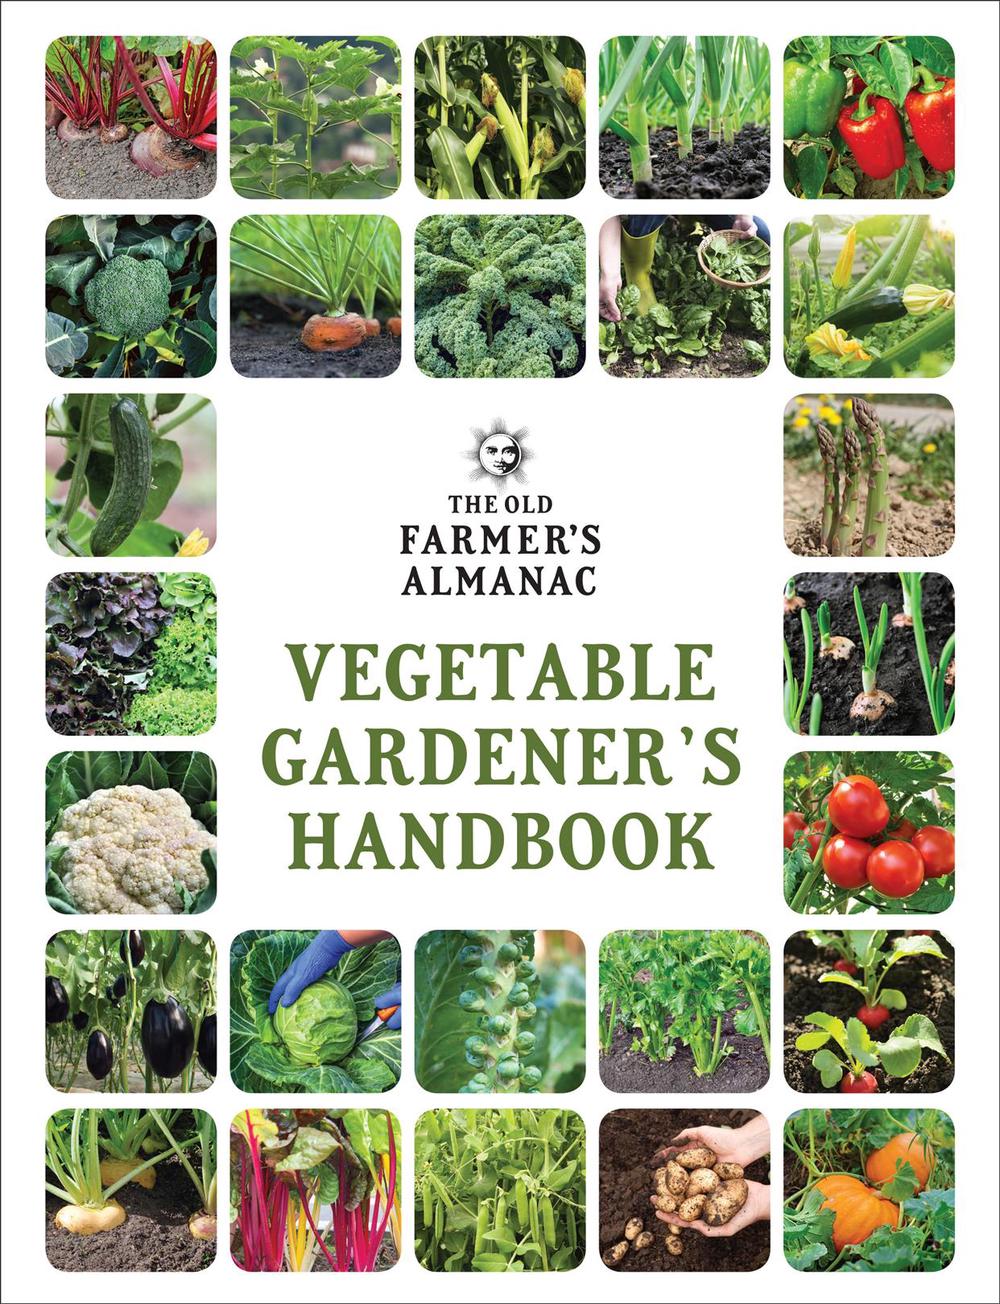 The Old Farmer's Almanac Vegetable Gardener's Handbook by Old Farmer's